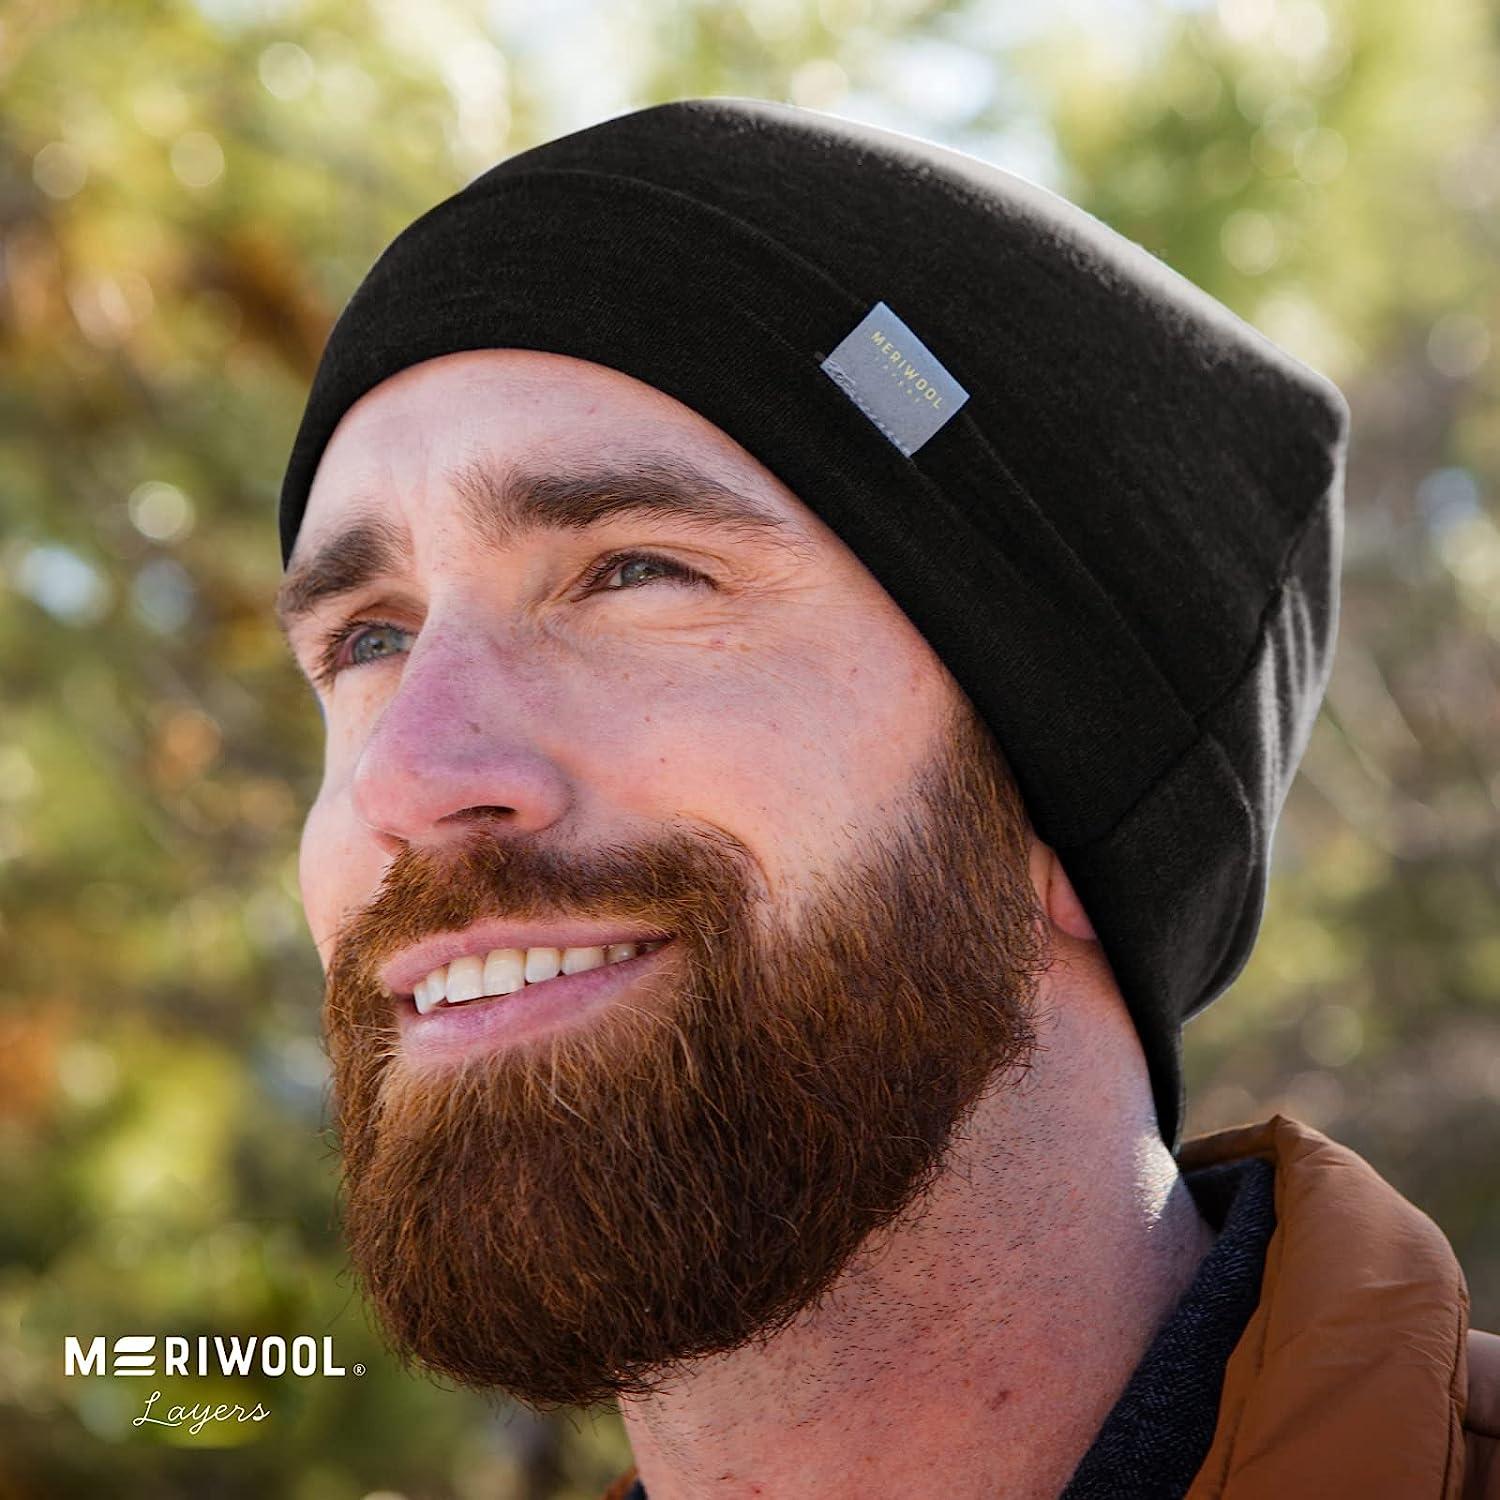 MERIWOOL Unisex Merino Wool Cuff Beanie Hat - Choose Your Color 